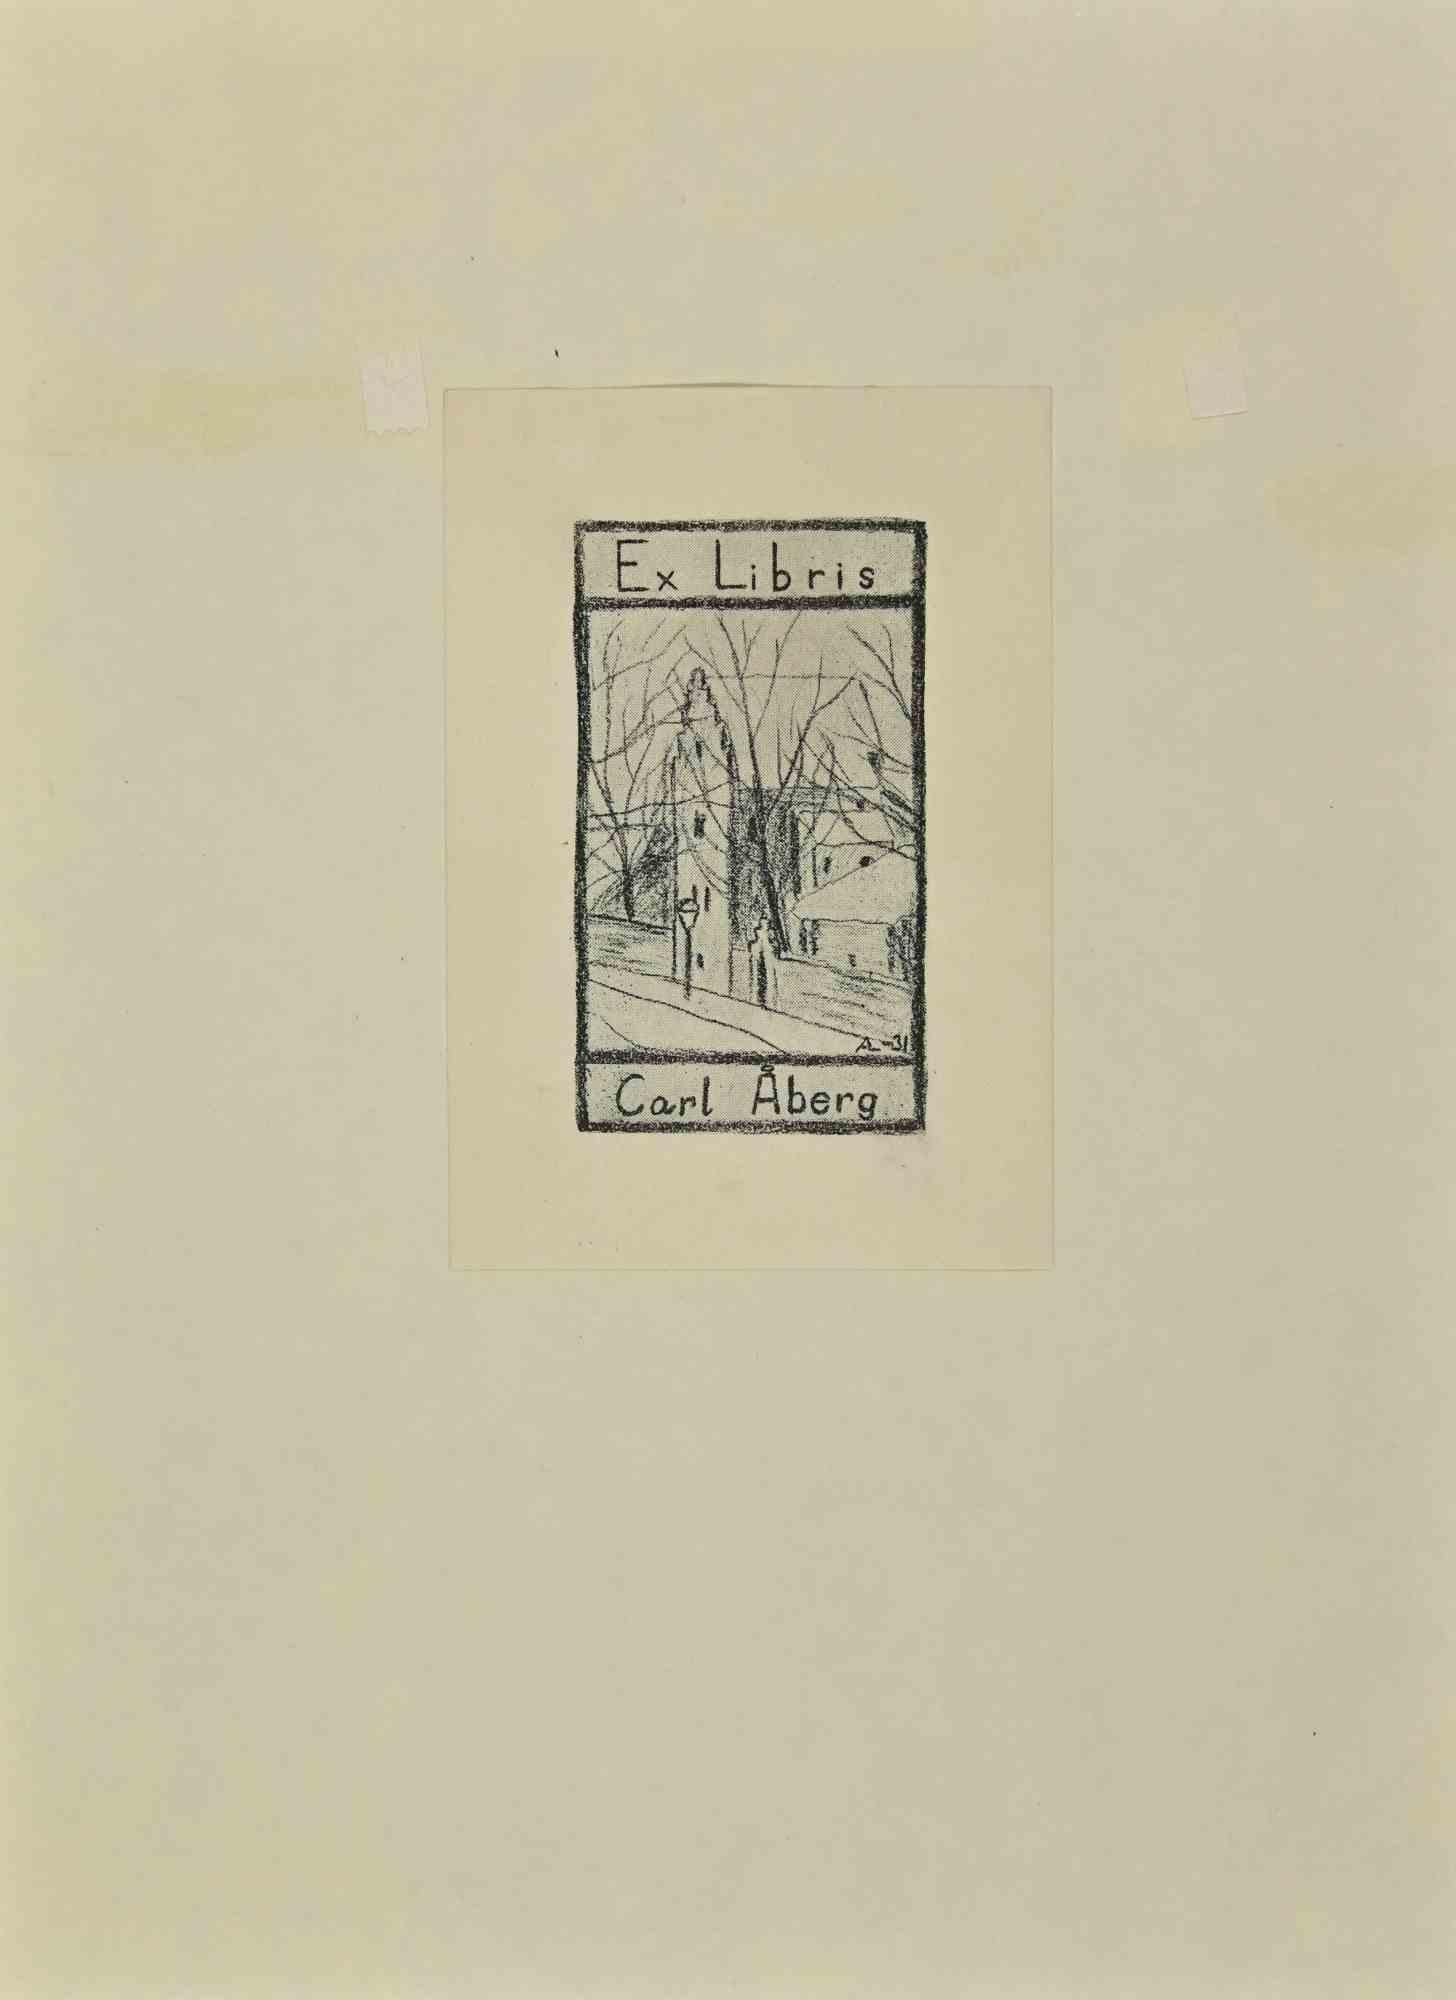  Ex Libris   Carl Aberg - Woodcut - Mid 20th Century - Art by Unknown